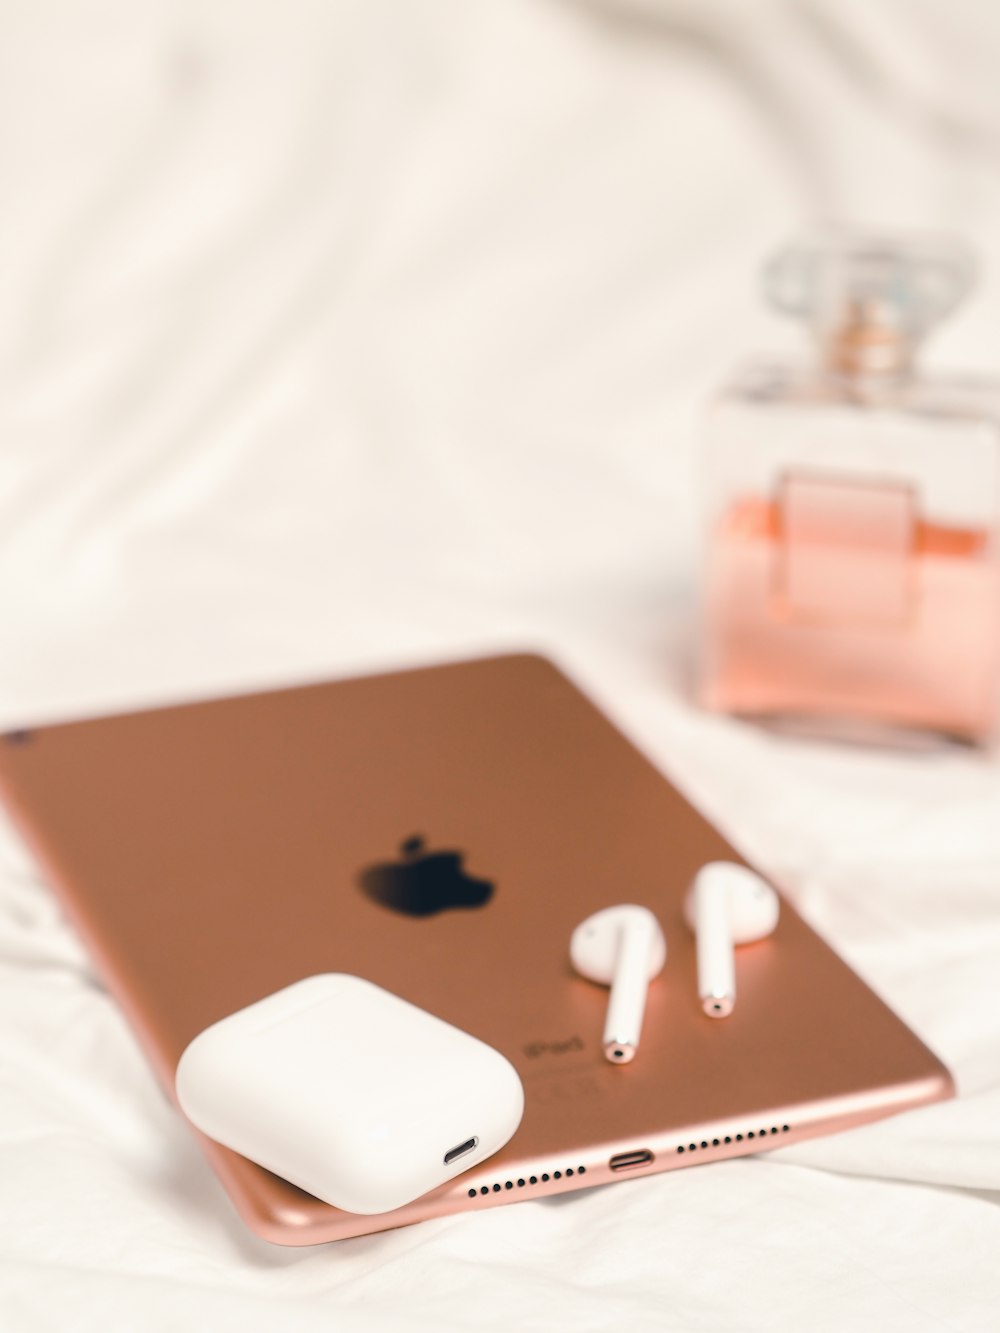 Apple earpods on silver macbook photo – Free Frankreich Image on Unsplash